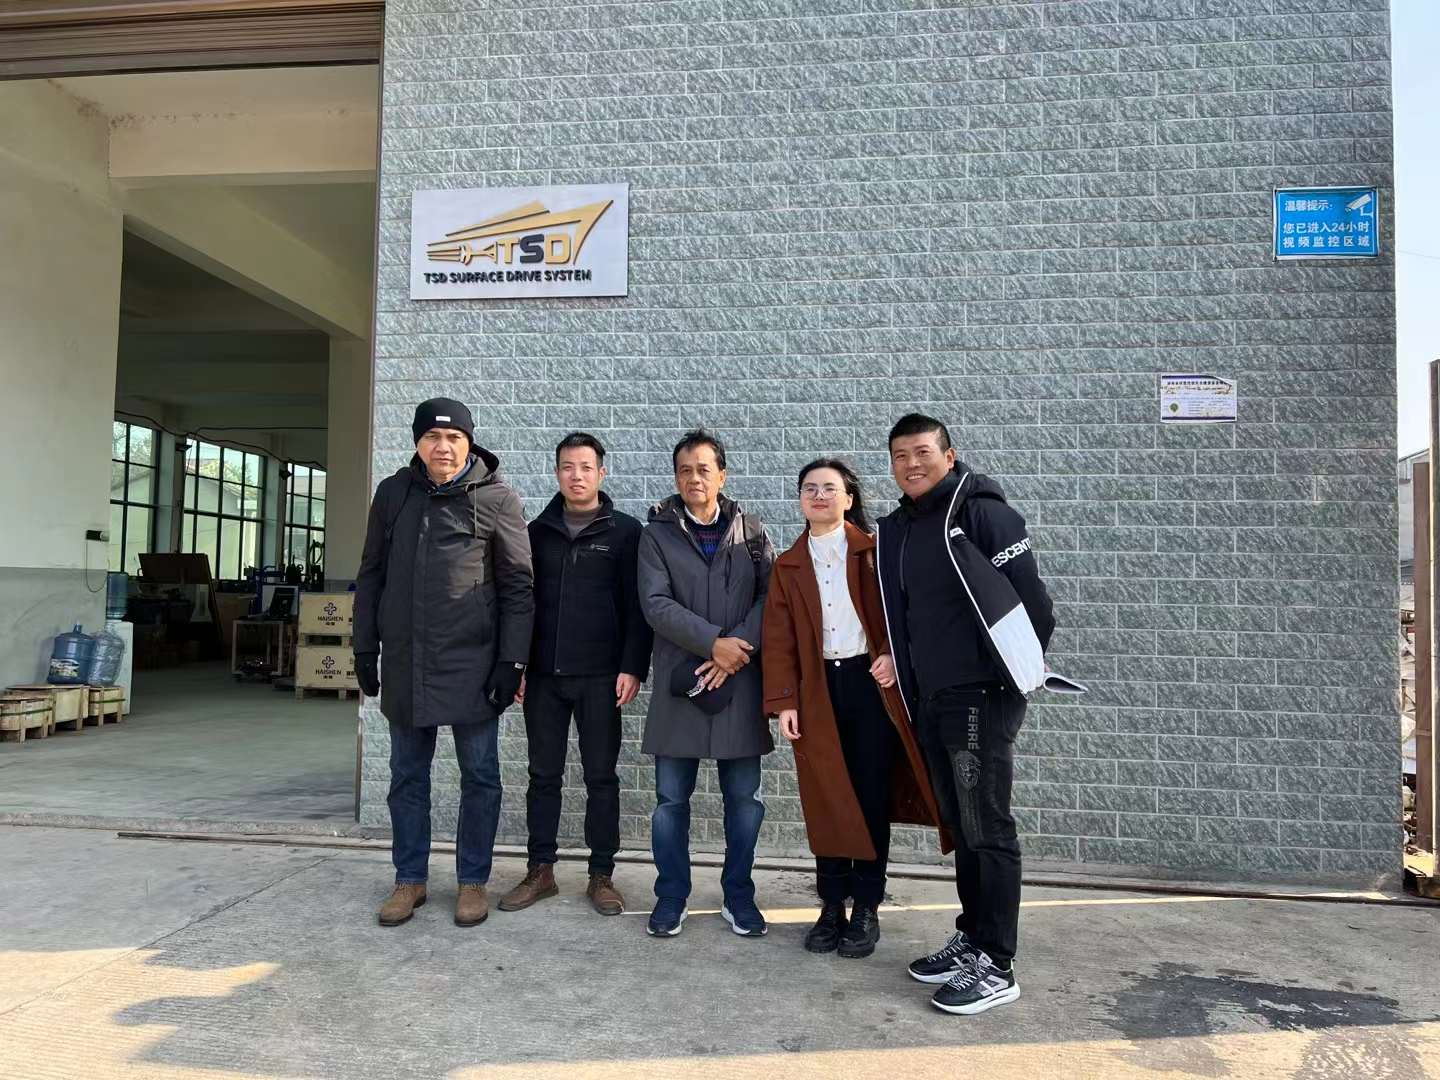 Malaysian customers visit TSD surface drive system factory